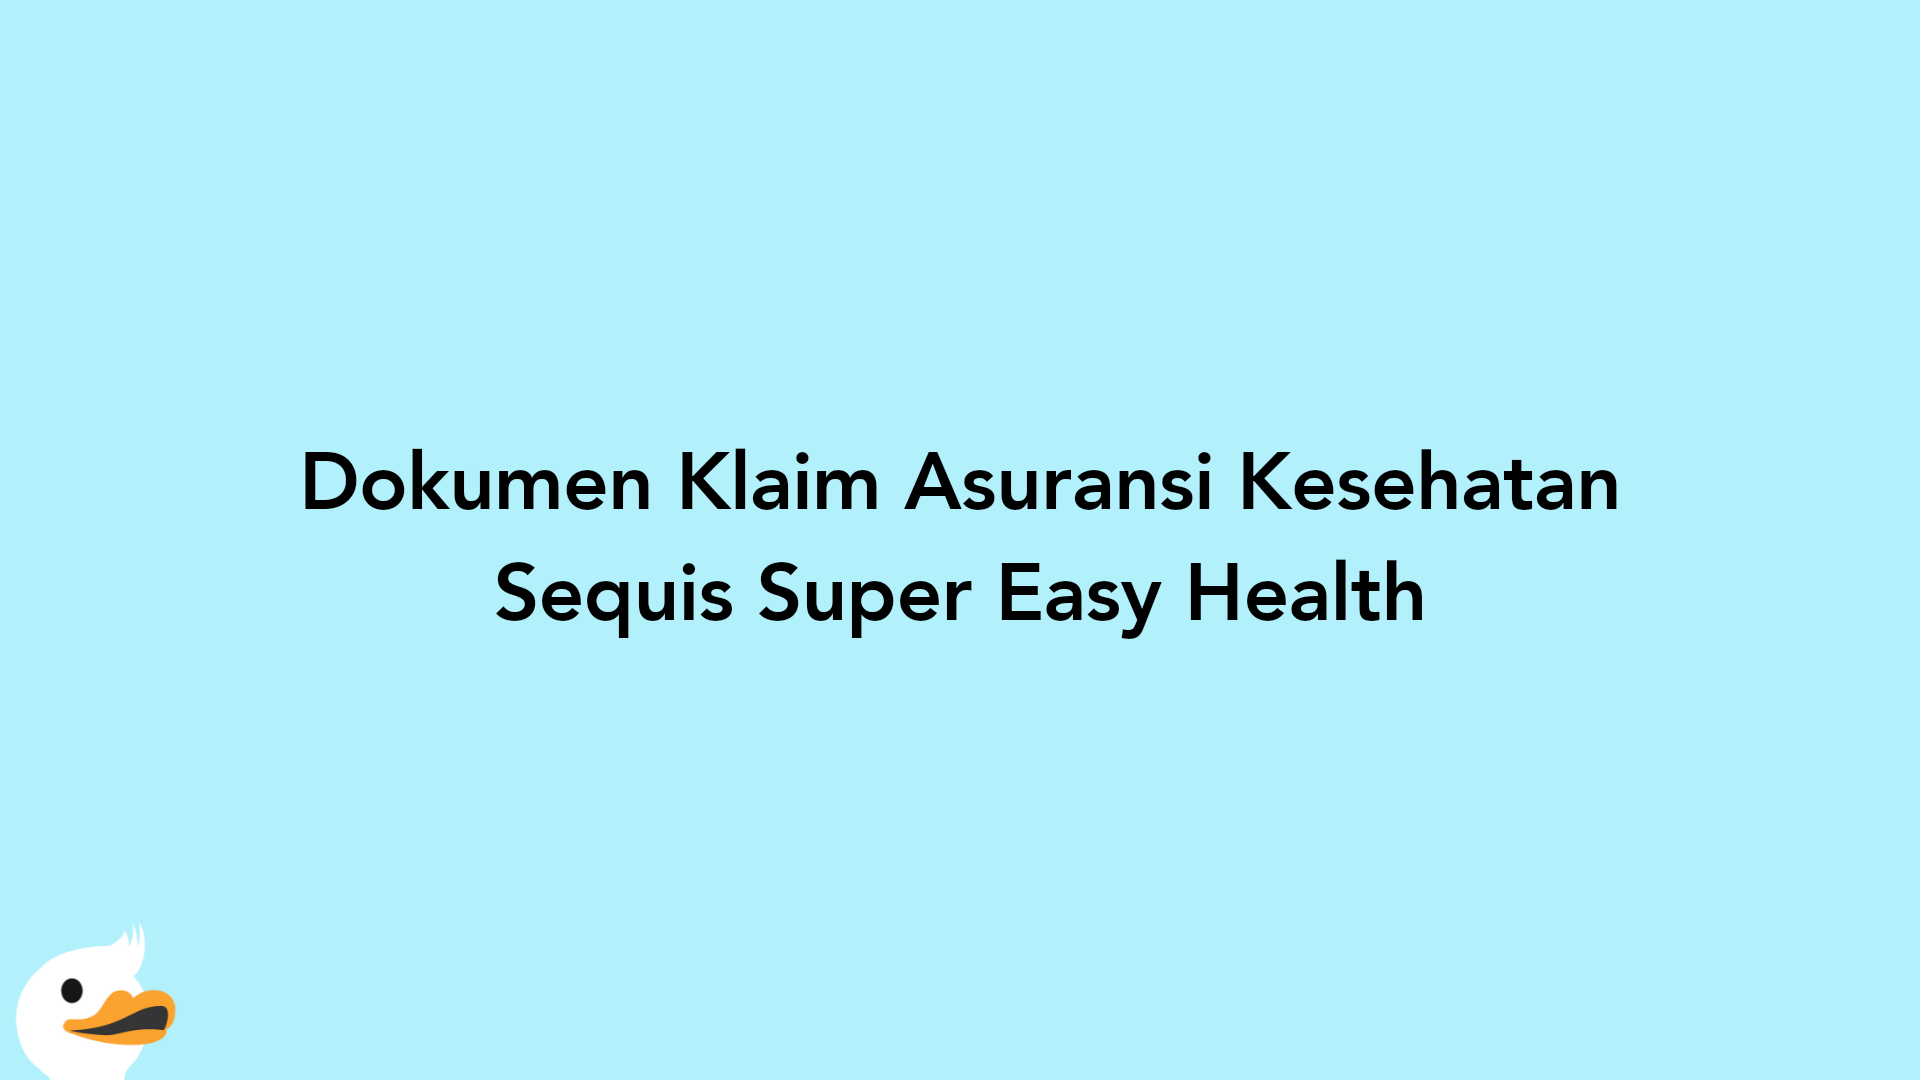 Dokumen Klaim Asuransi Kesehatan Sequis Super Easy Health